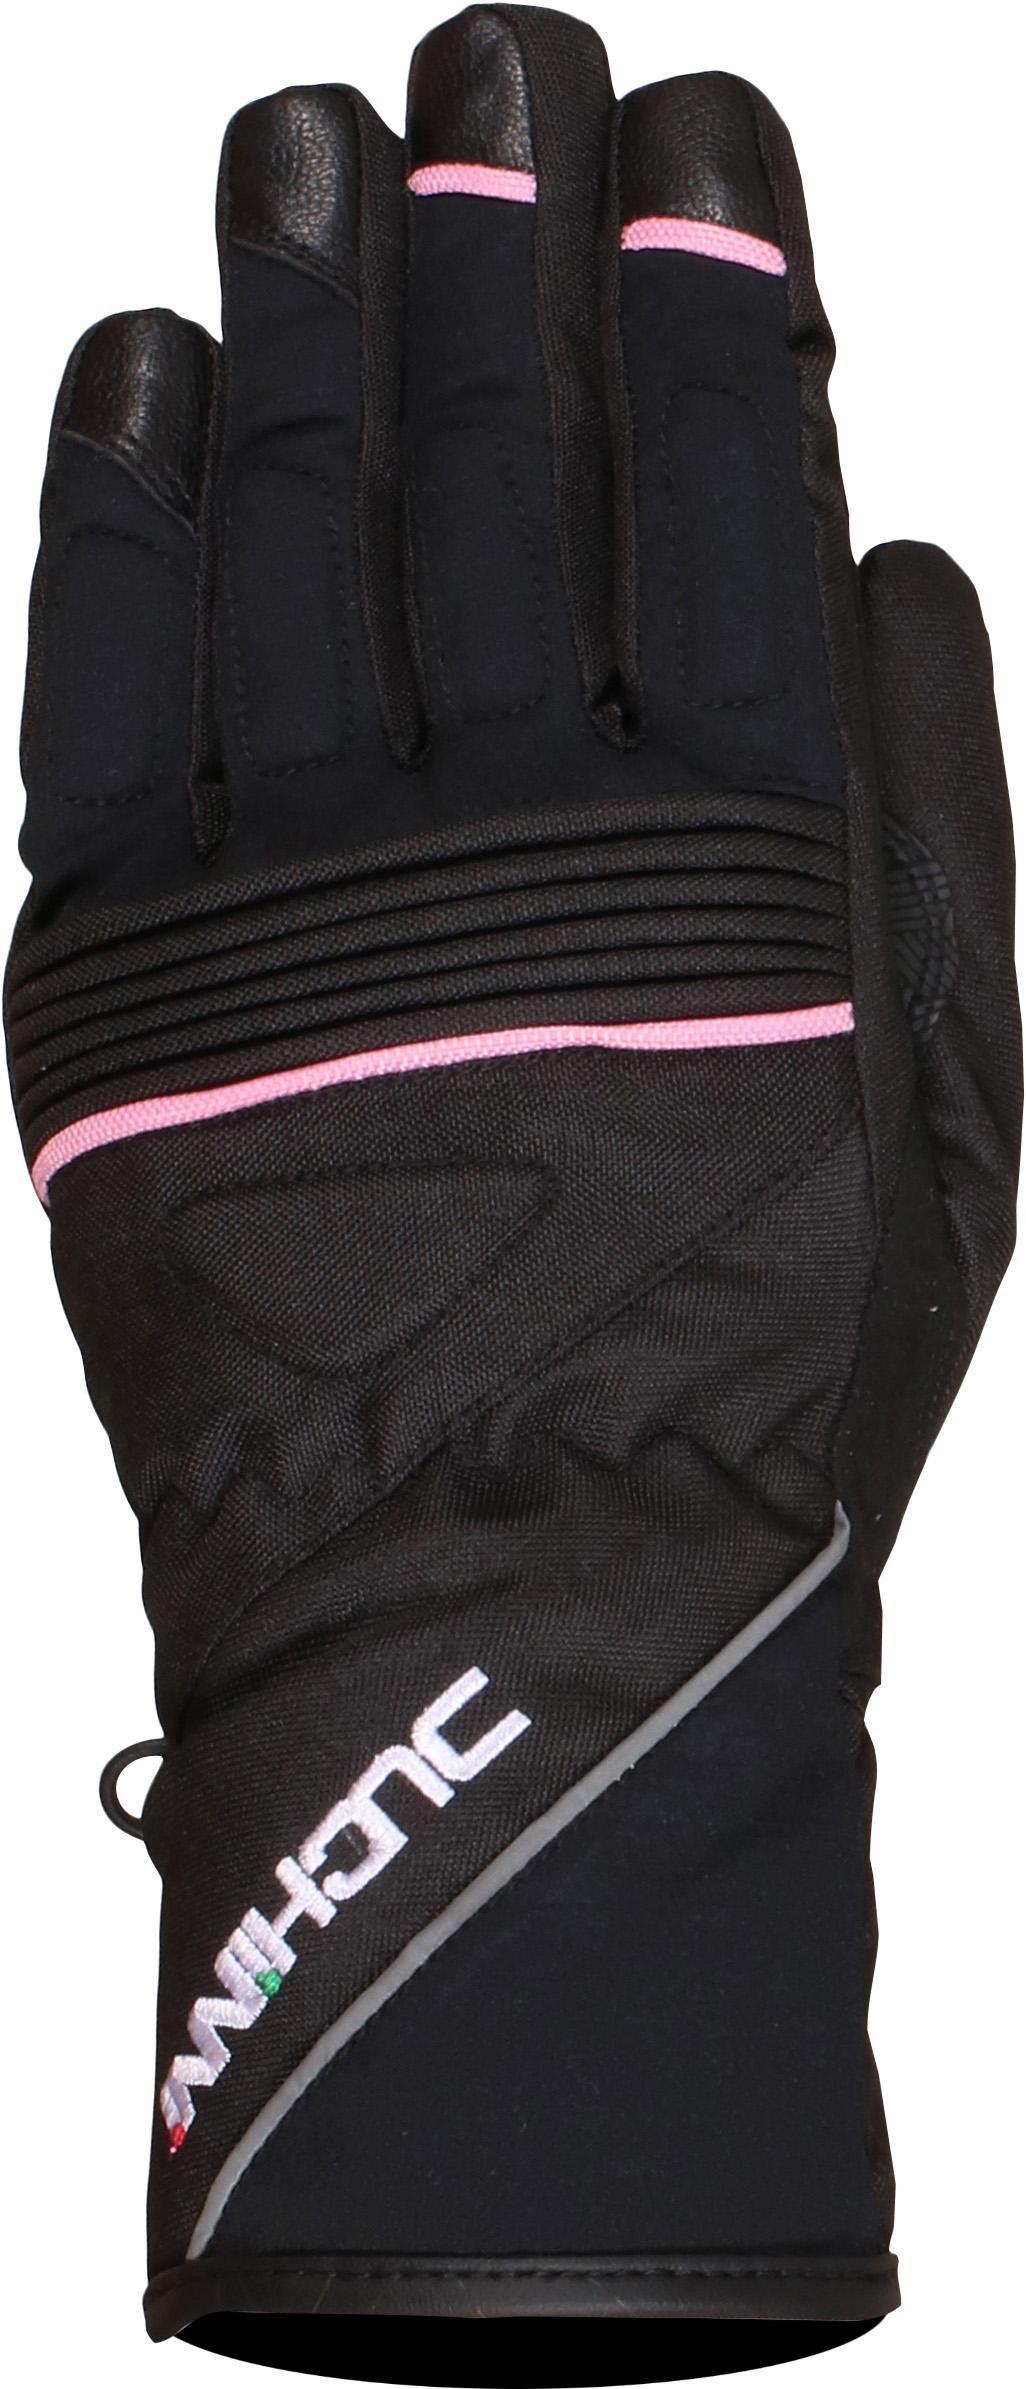 Duchinni Verona Women's Motorcycle Gloves - Black And Pink, S